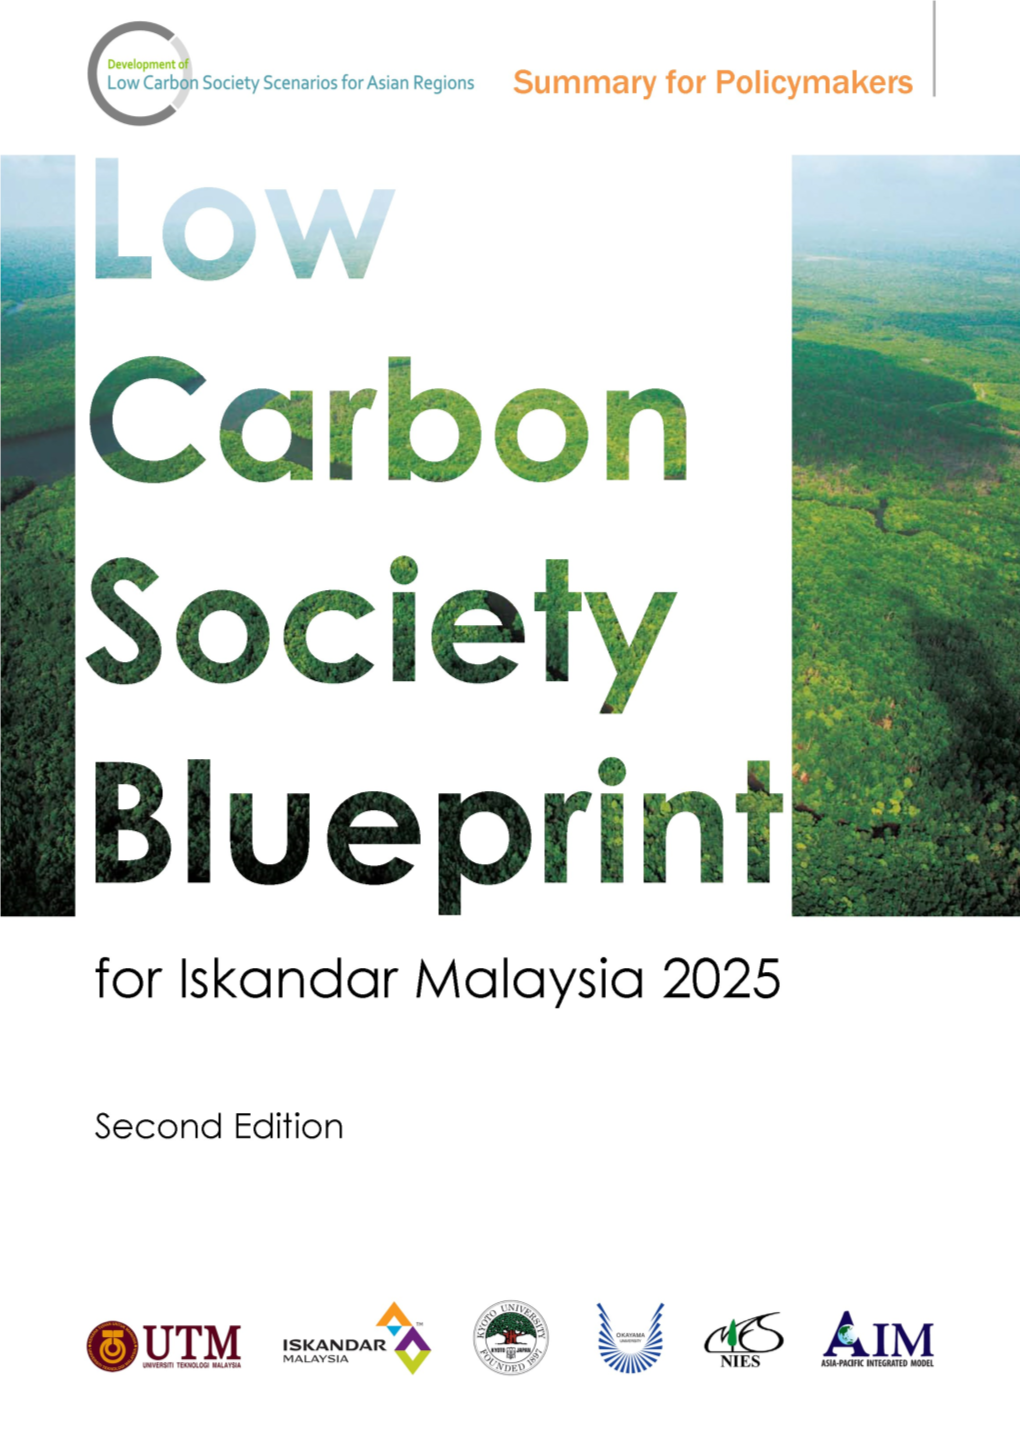 Low Carbon Society Blueprint for Iskandar Malaysia 2025 Summary